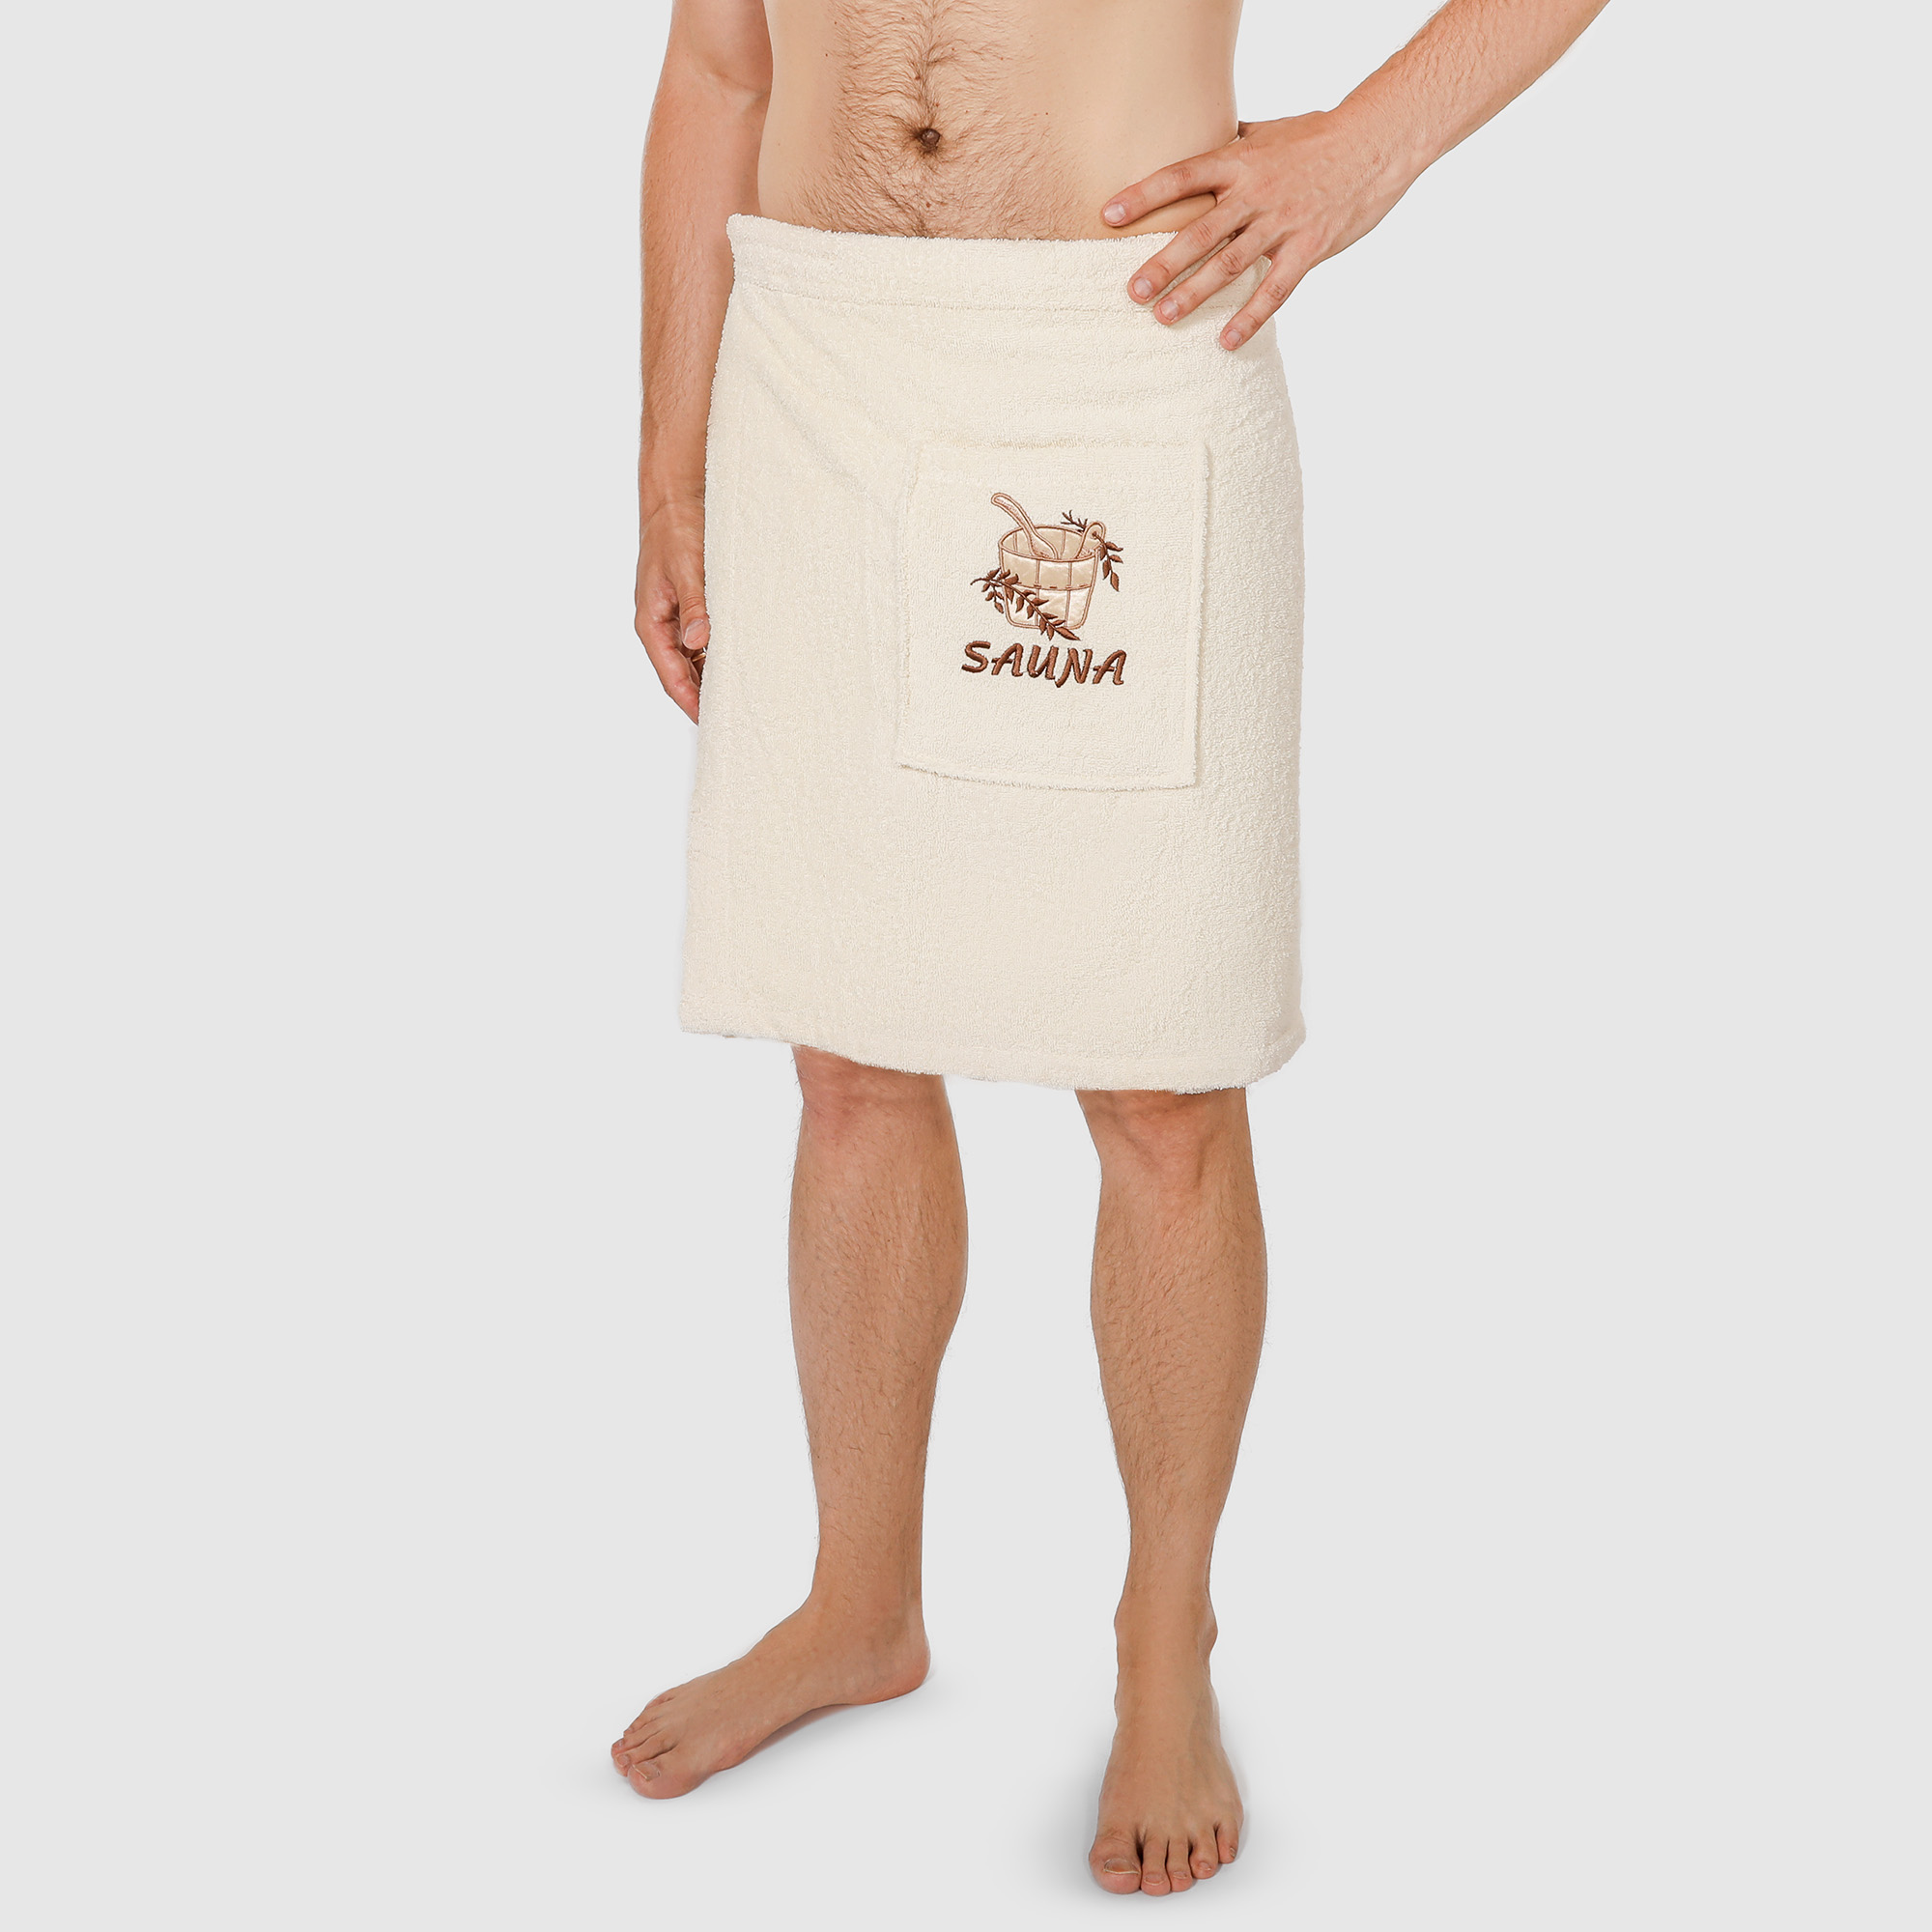 Килт мужской Asil sauna beige 55х160, цвет бежевый - фото 1